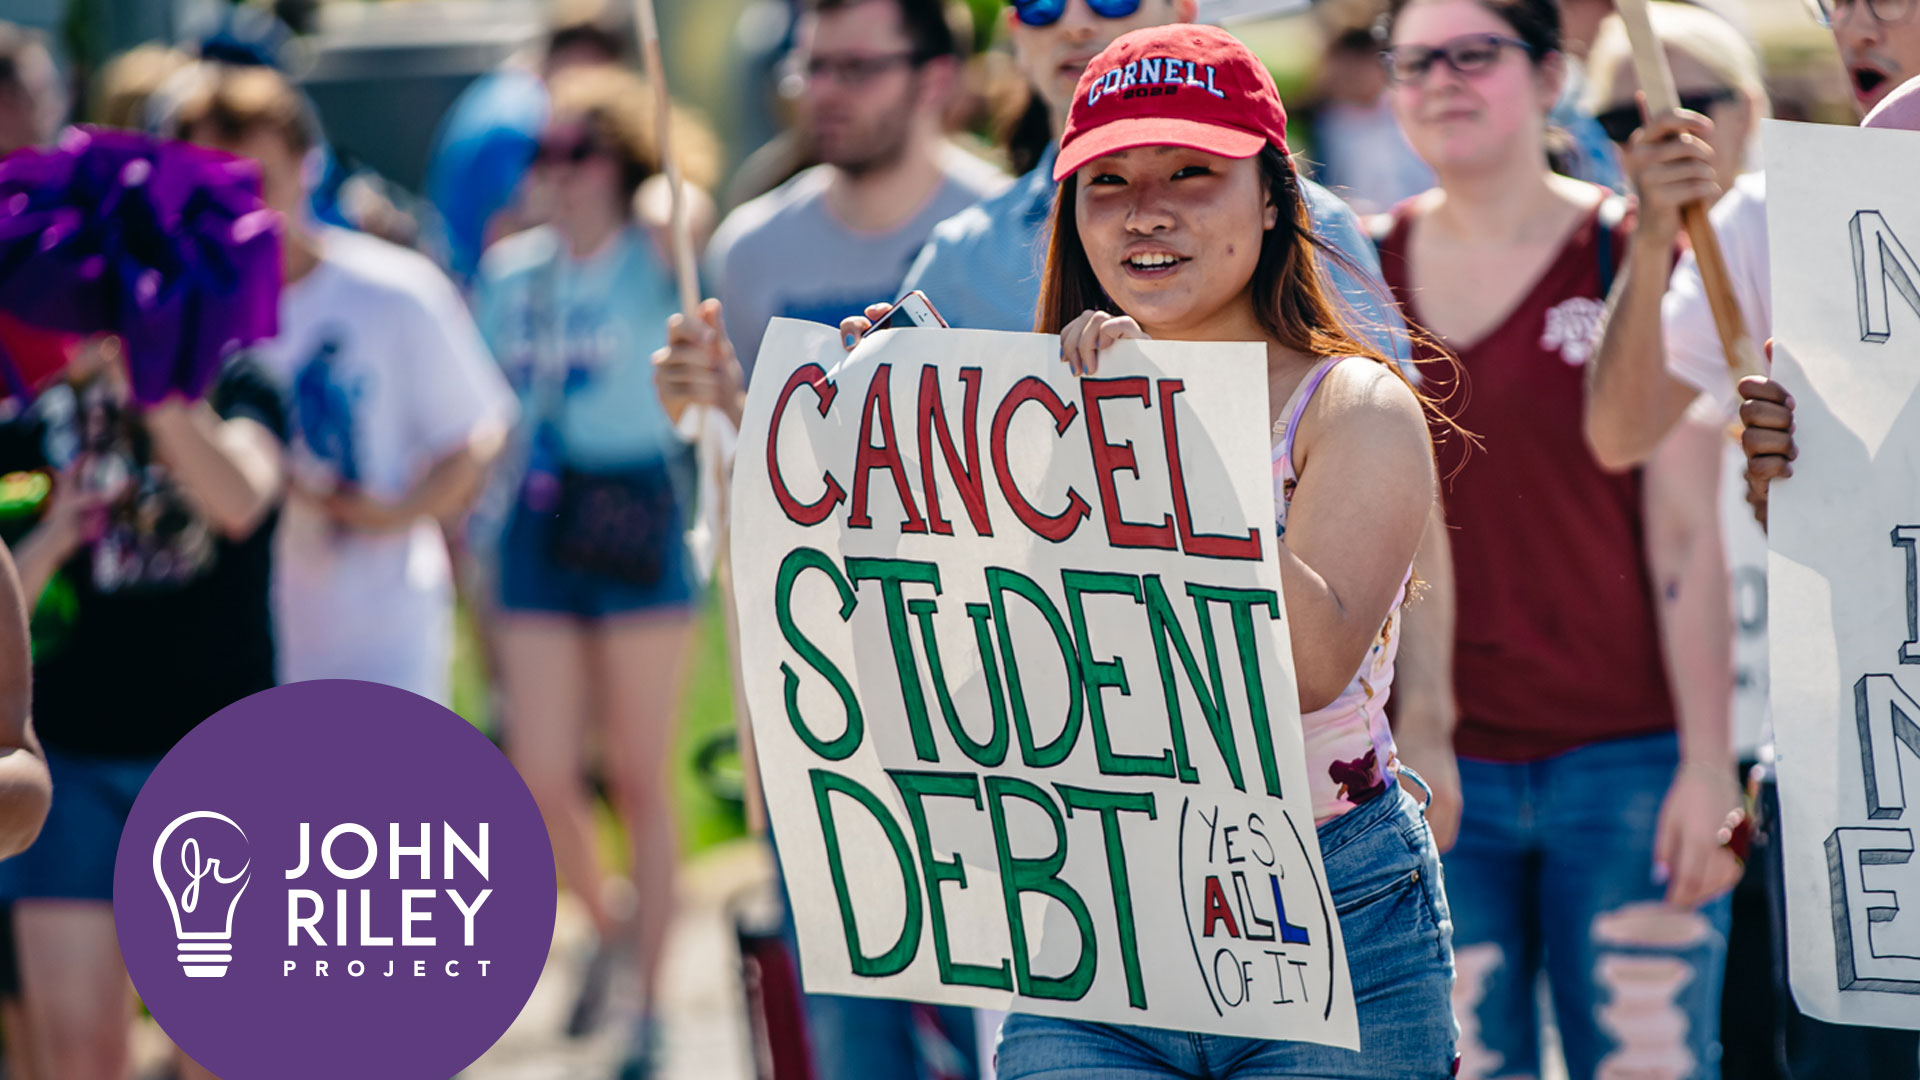 cancel student debt, john riley project, jrp0191